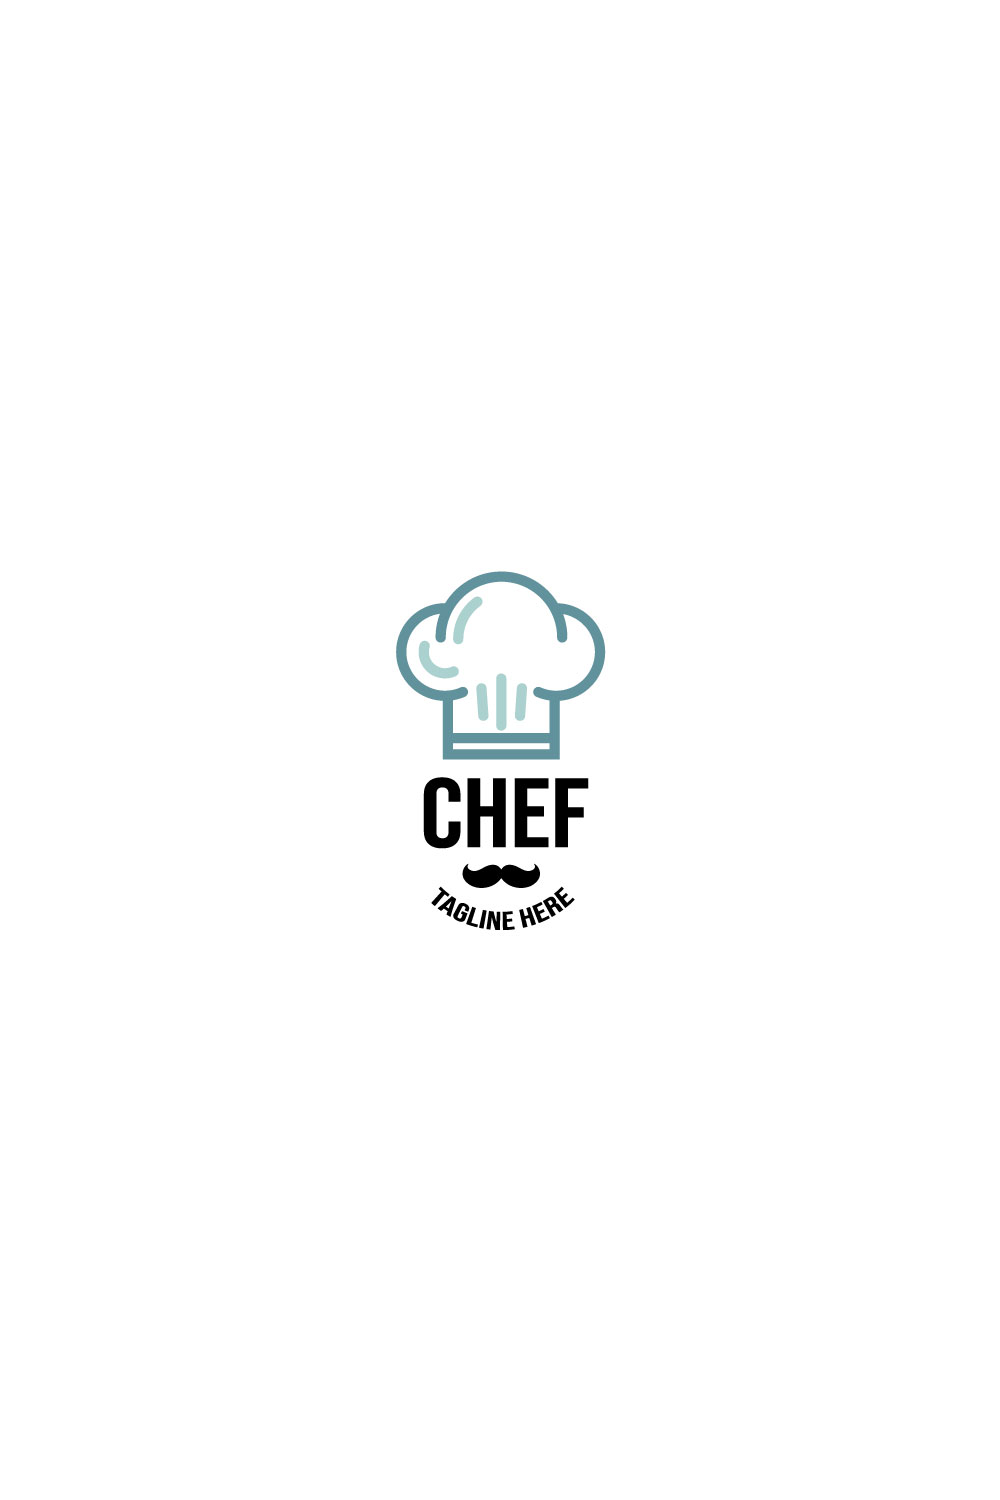 Kitchen Chef Logo Design vector template pinterest preview image.